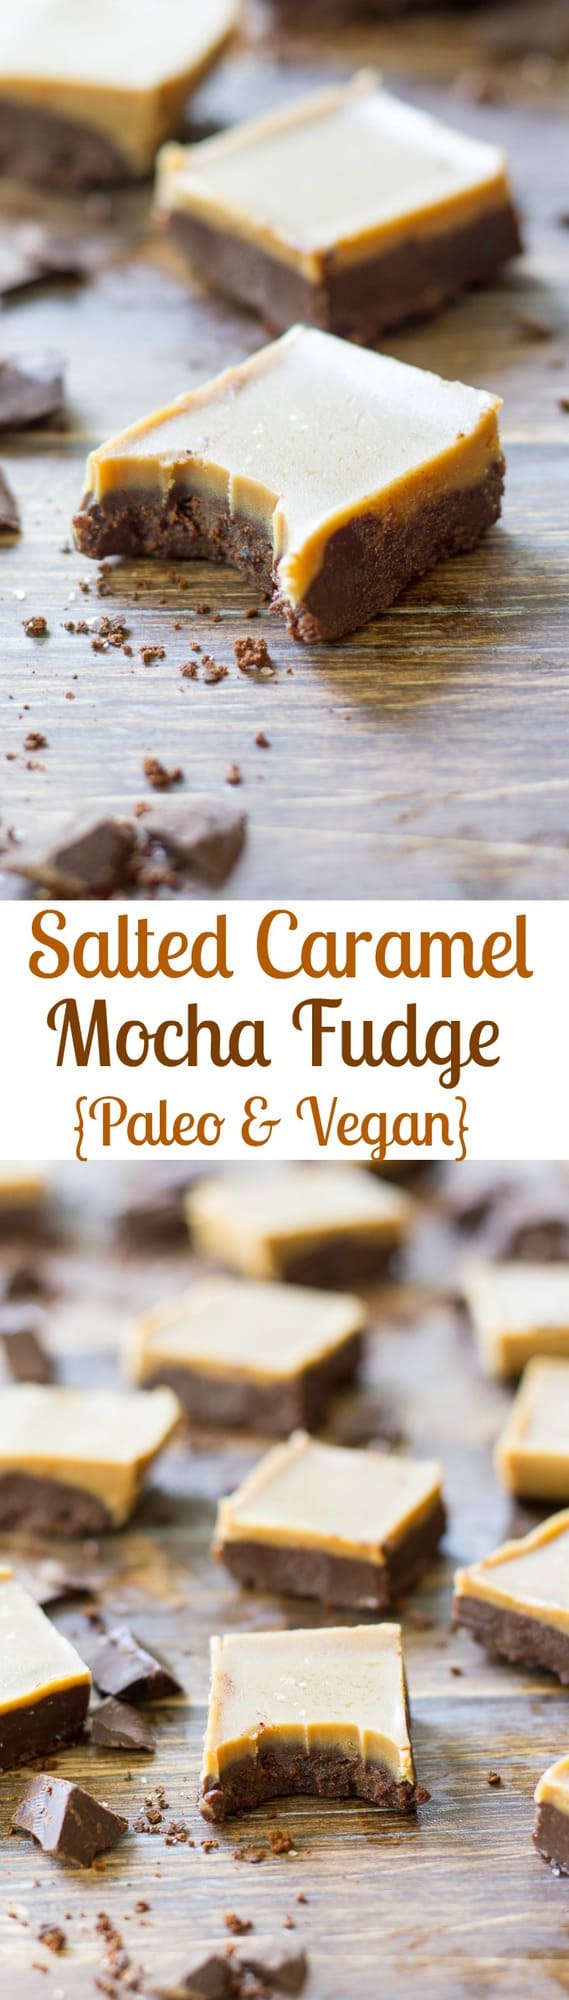 Salted caramel mocha fudge - Paleo & Vegan